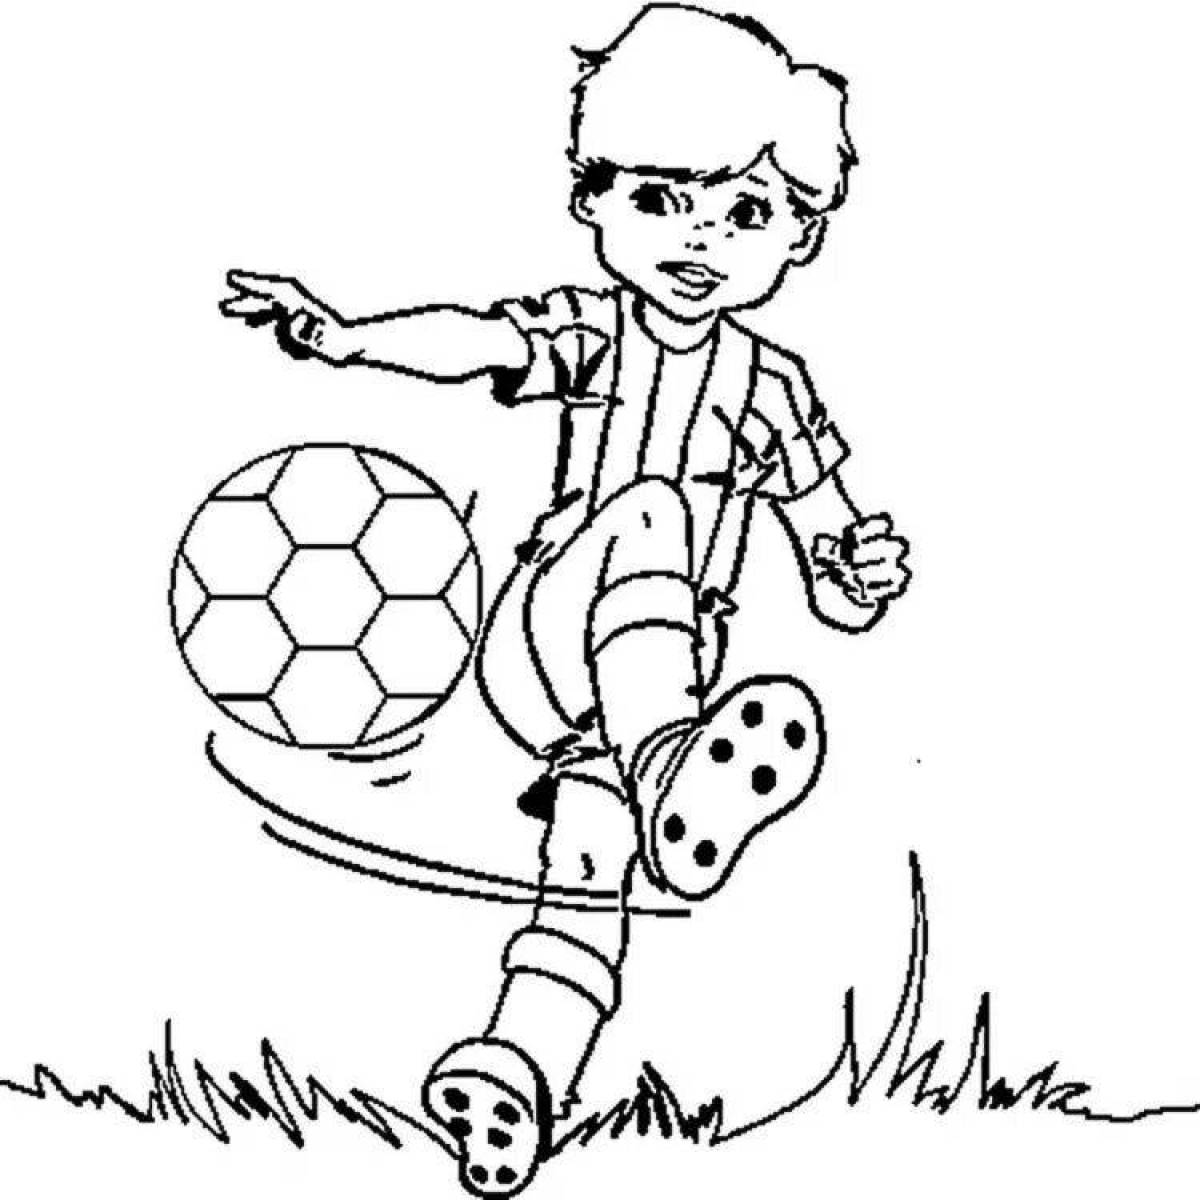 Football boy dynamic coloring